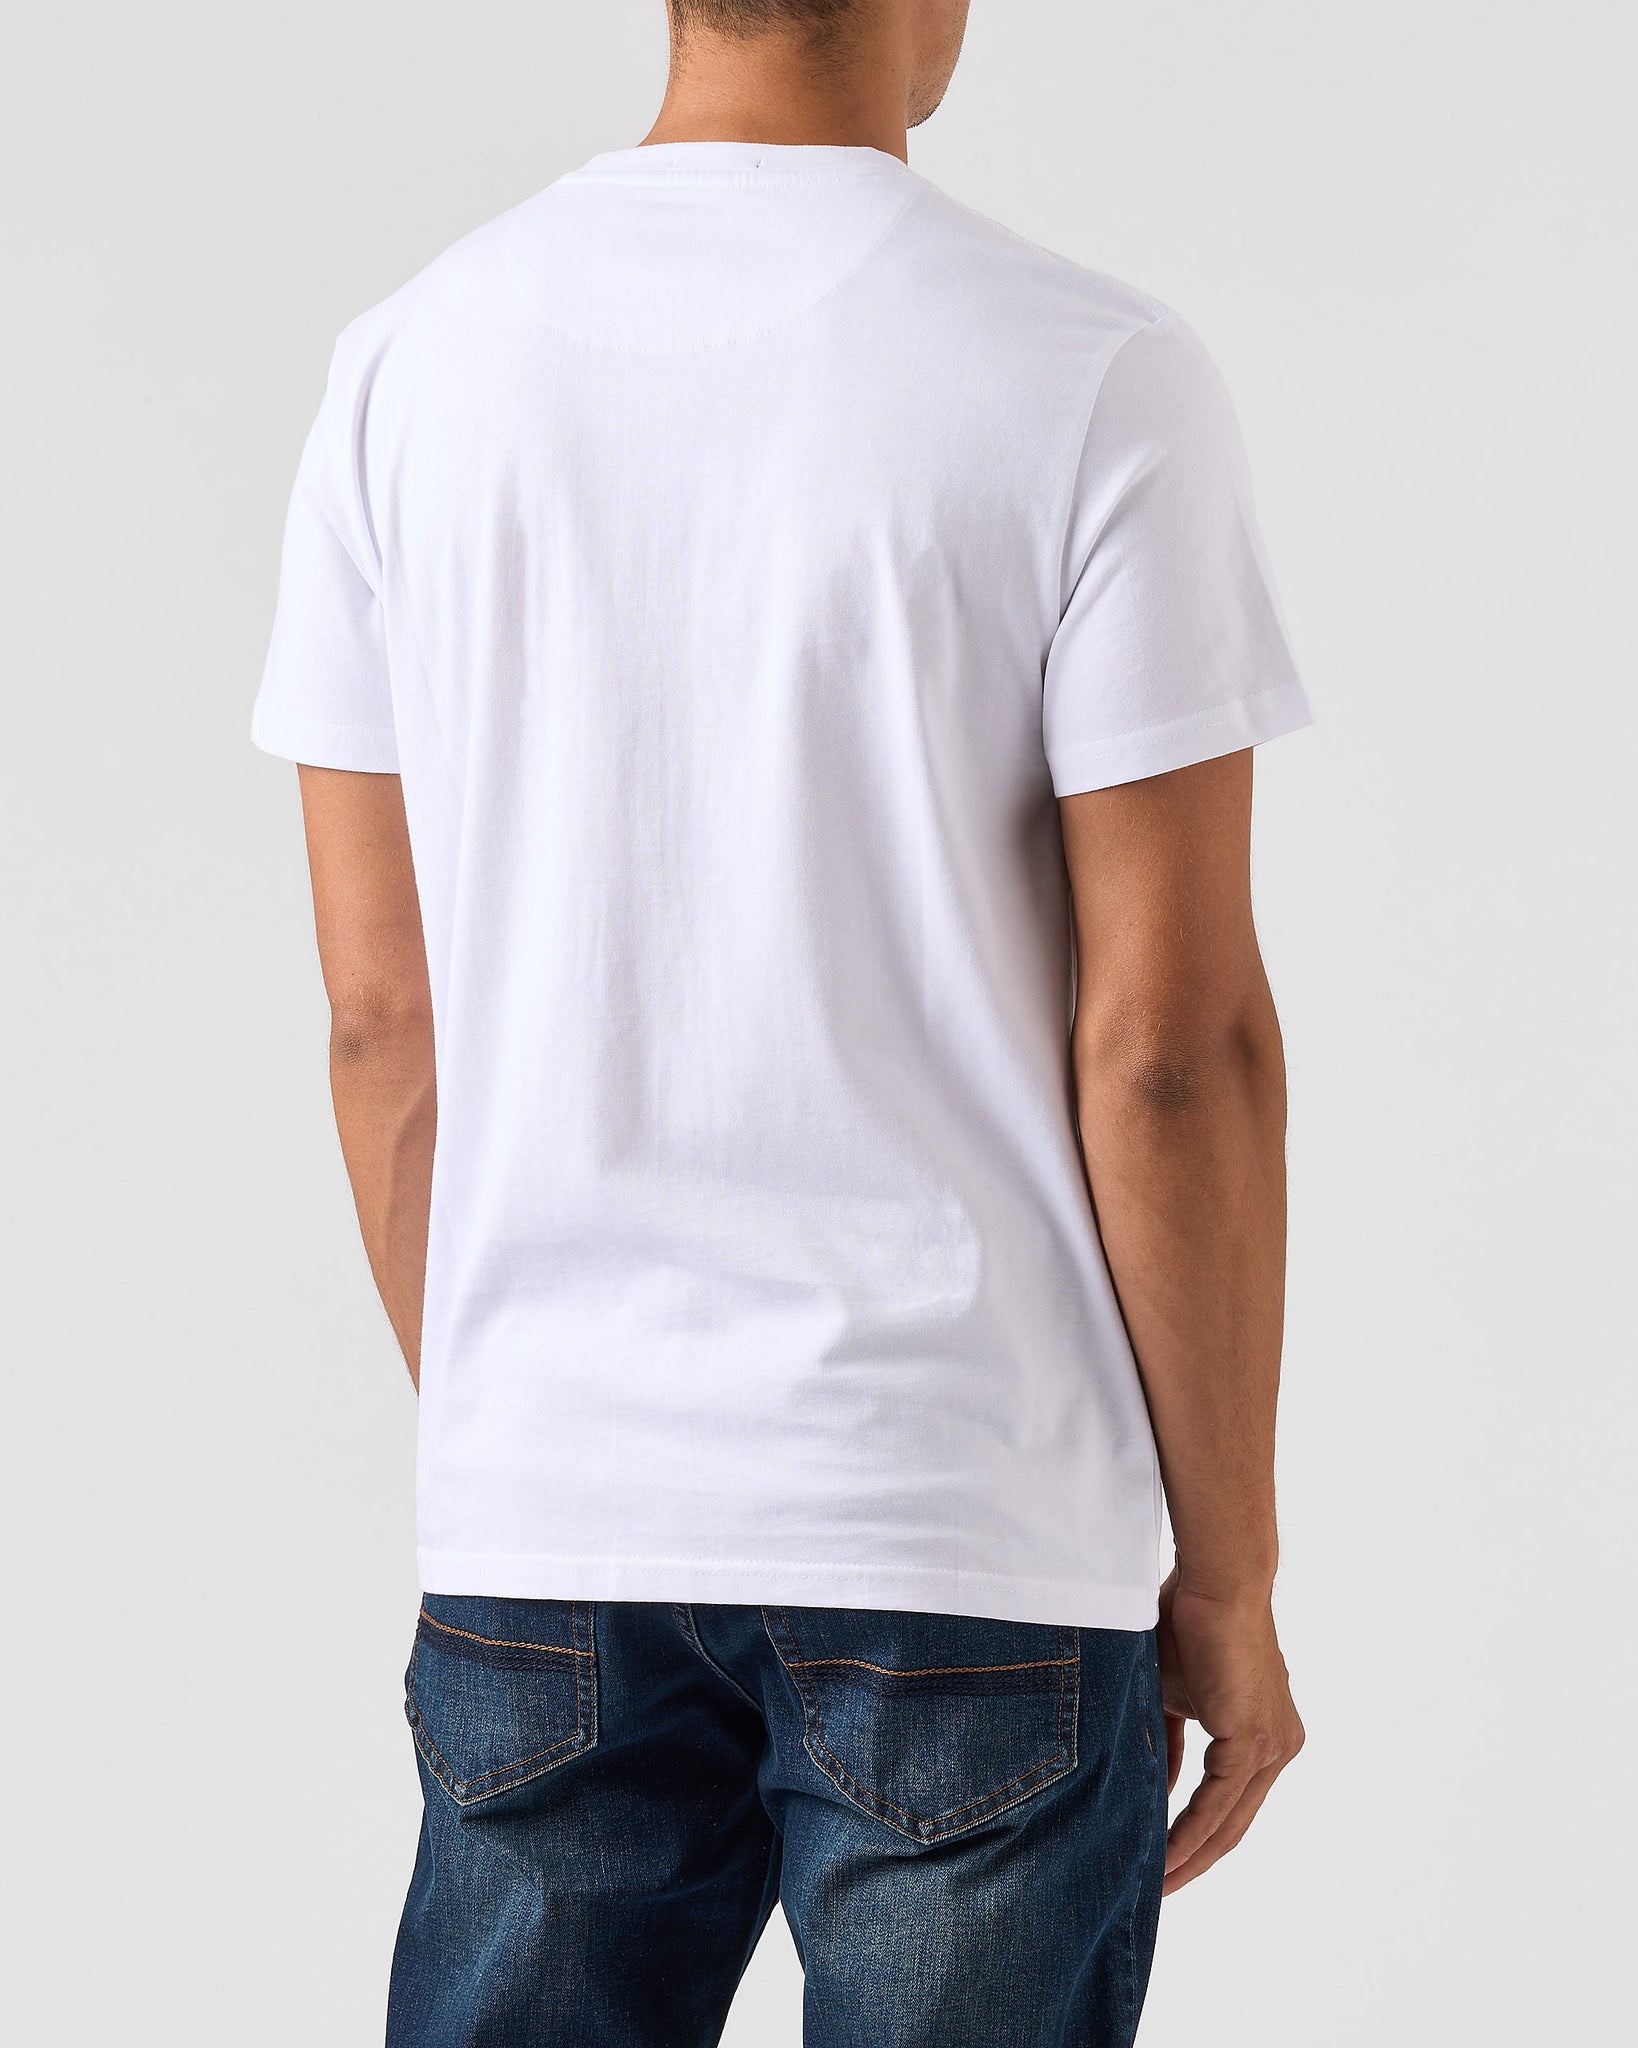 72 Hours Graphic T-Shirt White